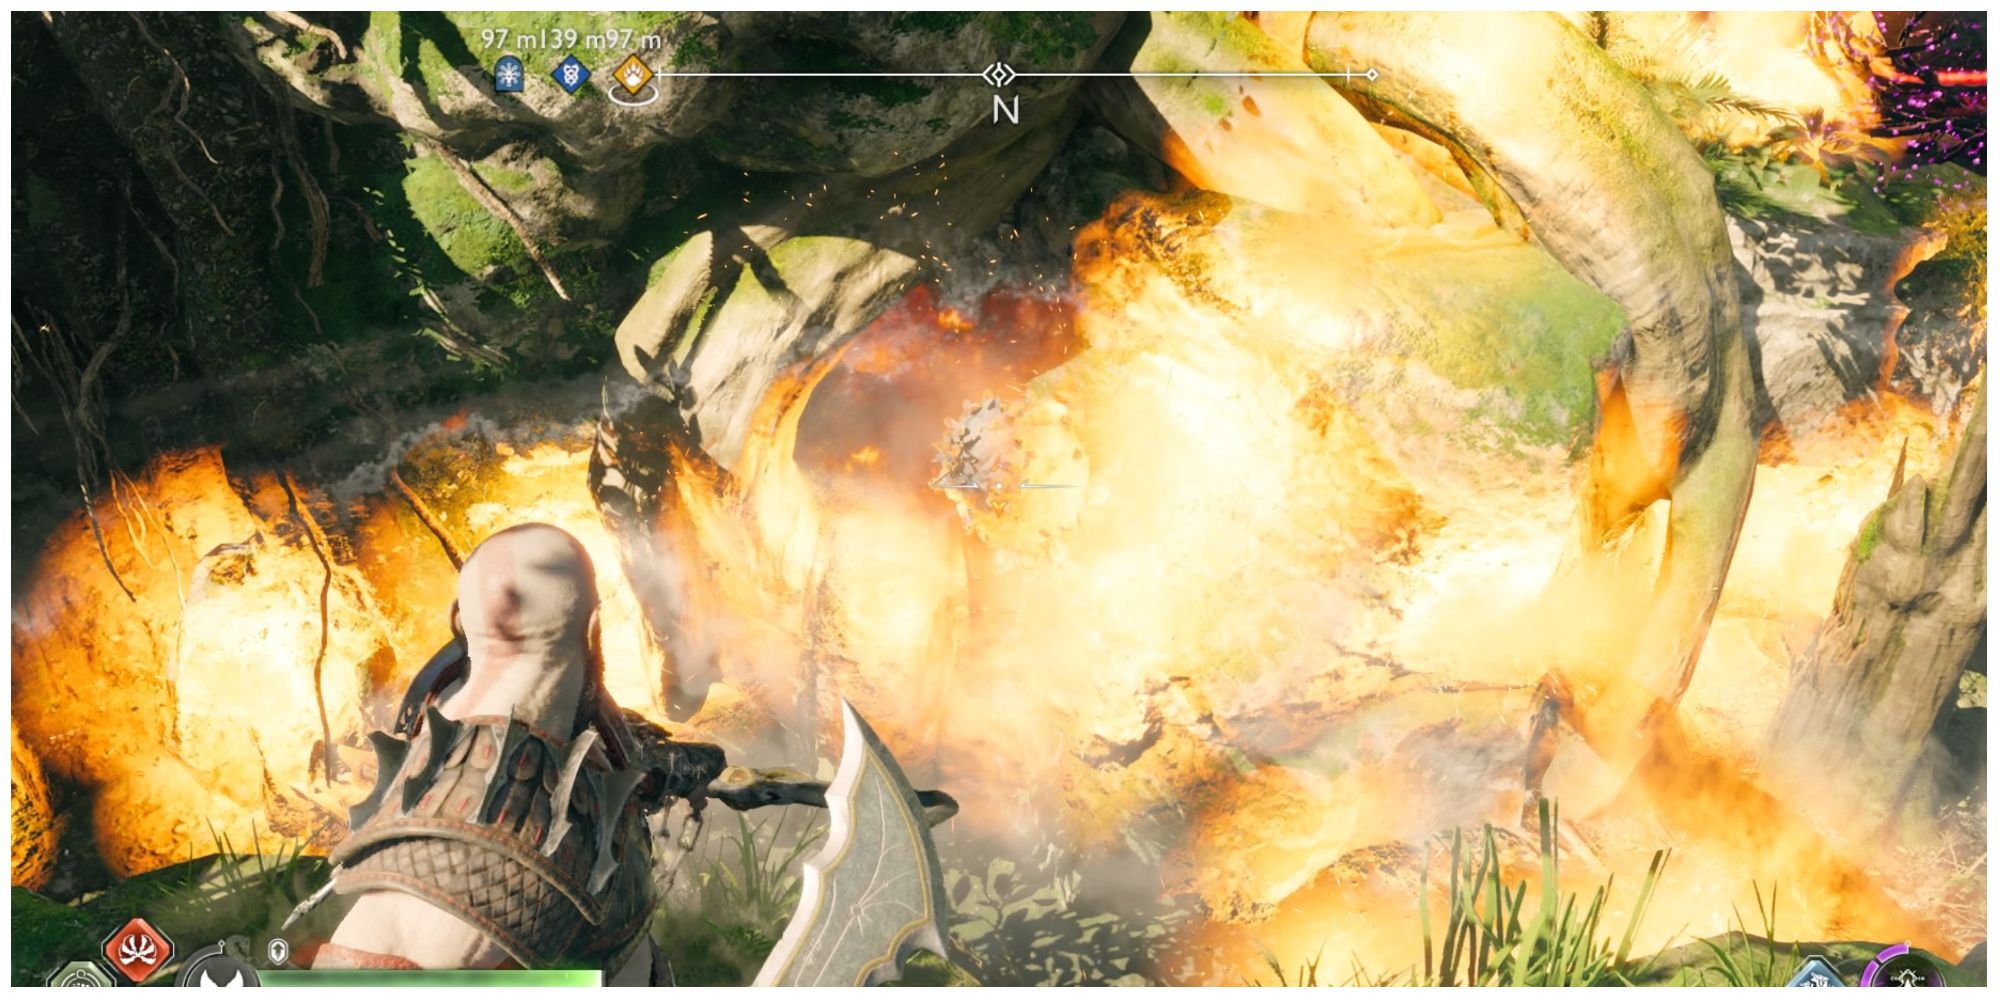 Kratos burns a plant in God of War Ragnarok